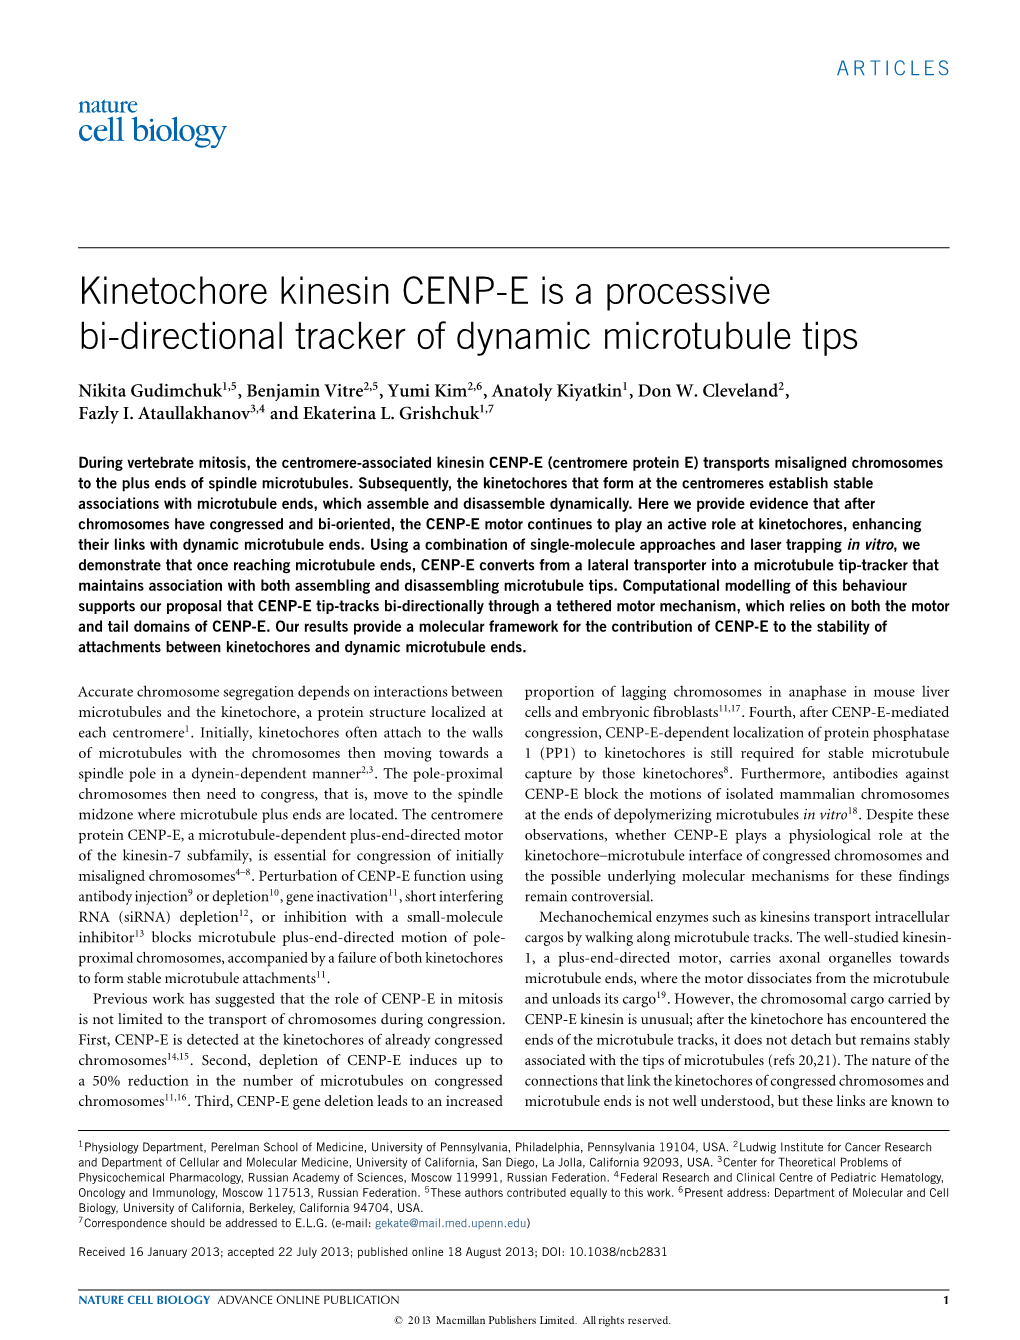 Kinetochore Kinesin CENP-E Is a Processive Bi-Directional Tracker of Dynamic Microtubule Tips